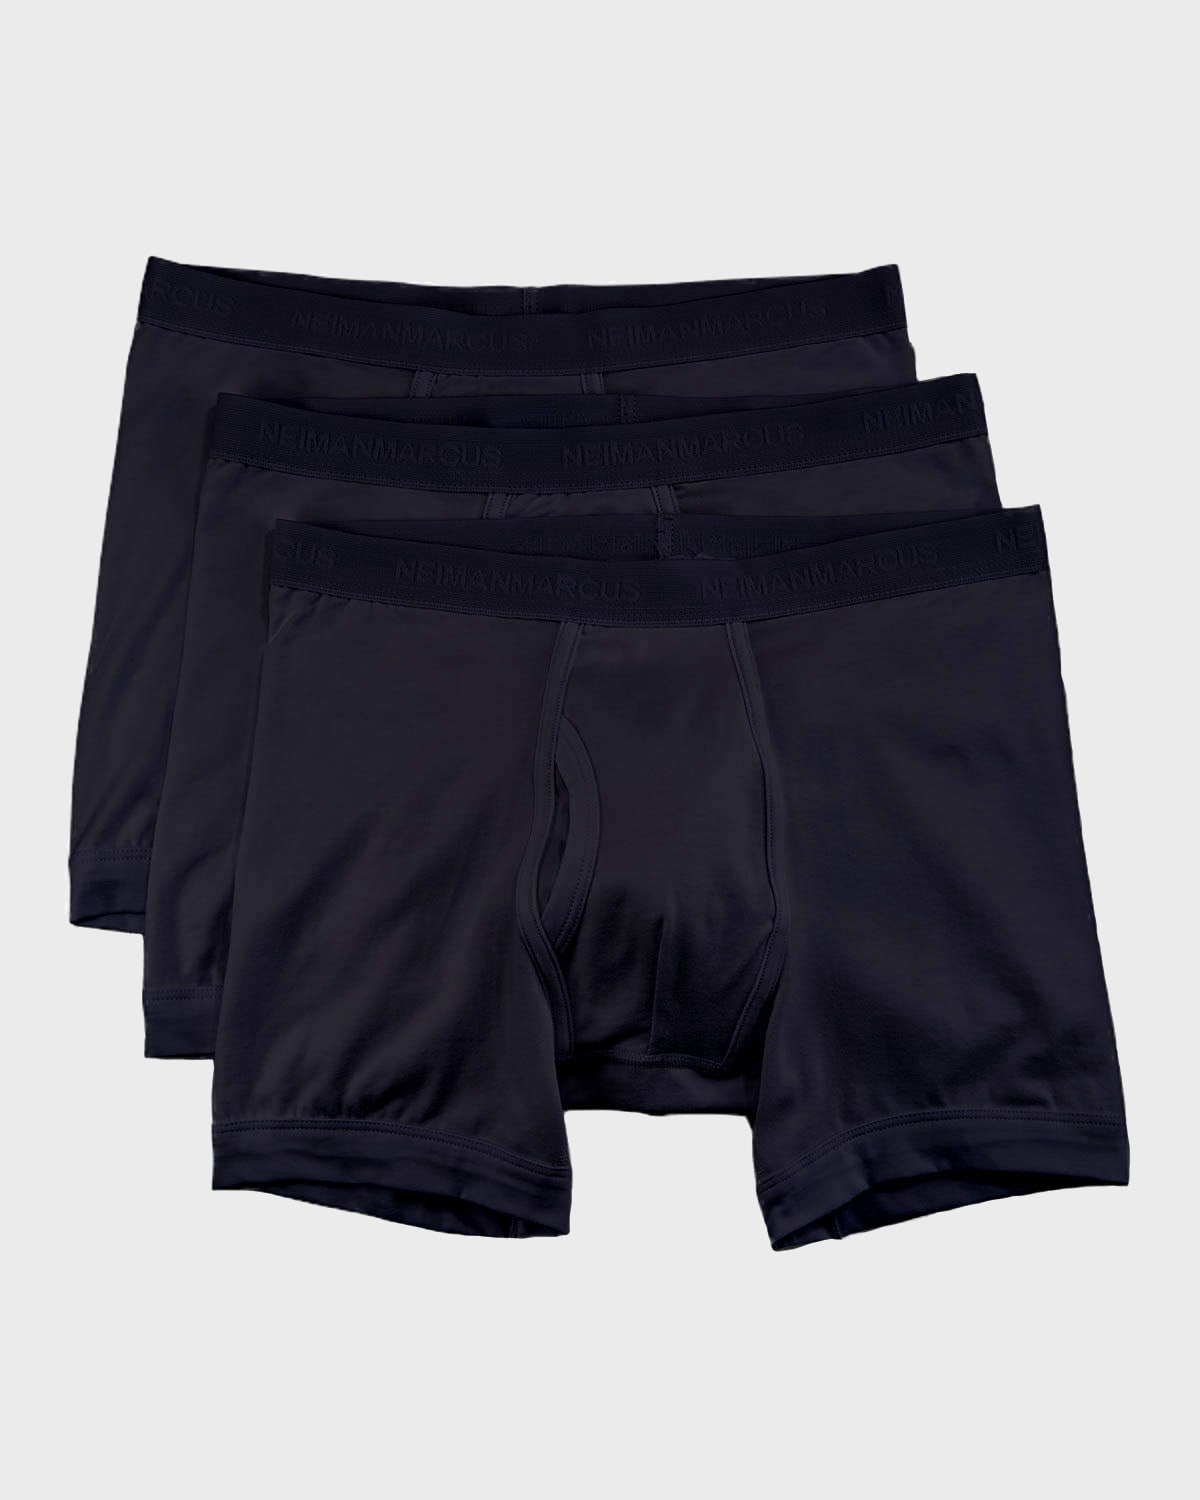 Neiman Marcus Men's 3-pack Tagless Cotton Stretch Boxer Briefs In Black